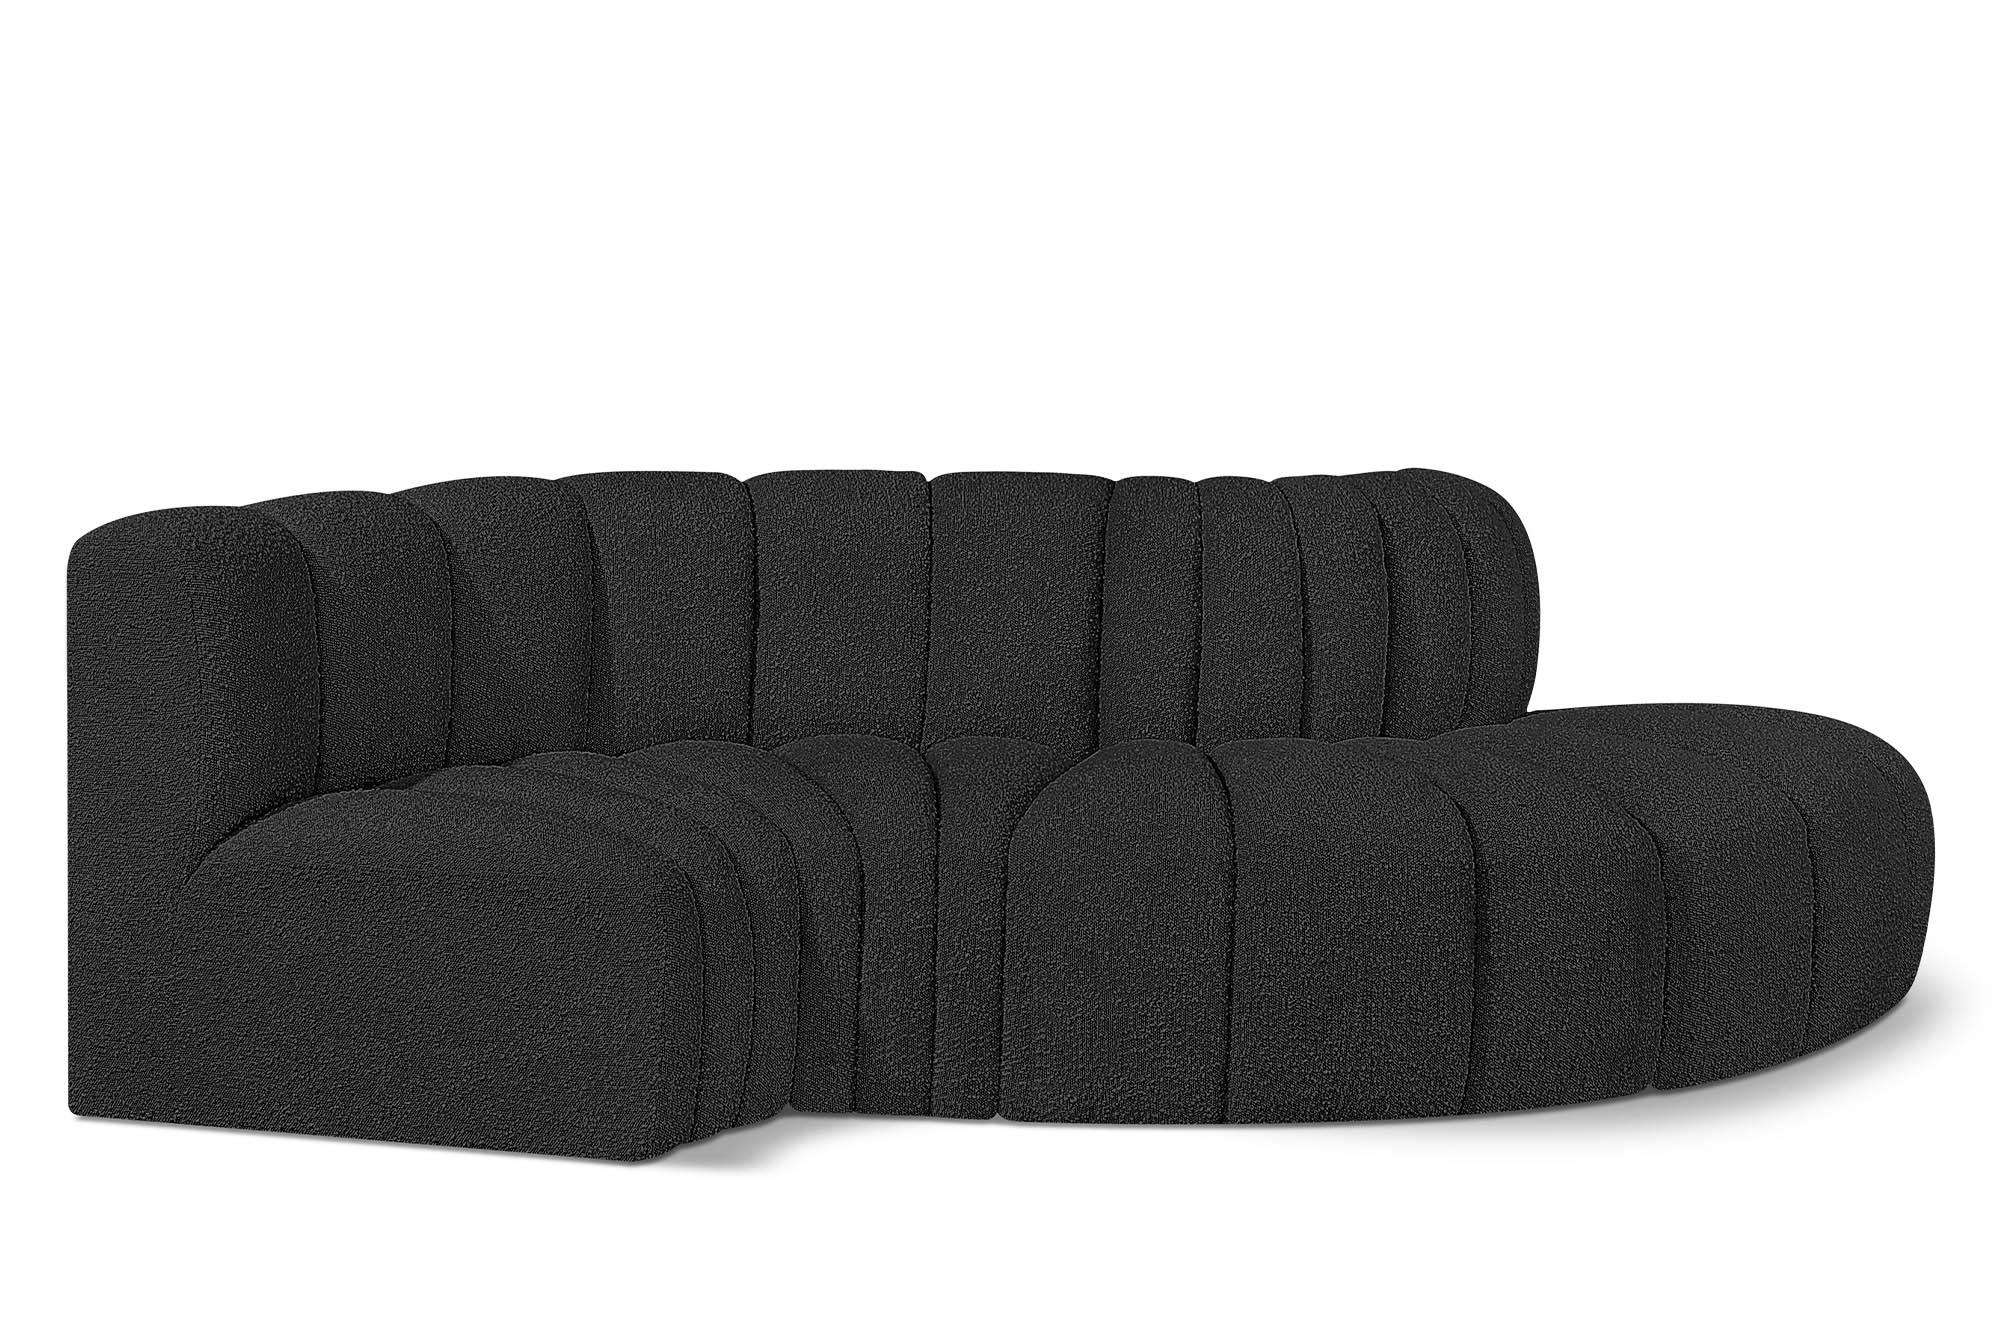 Contemporary, Modern Modular Sectional Sofa ARC 102Black-S4D 102Black-S4D in Black 